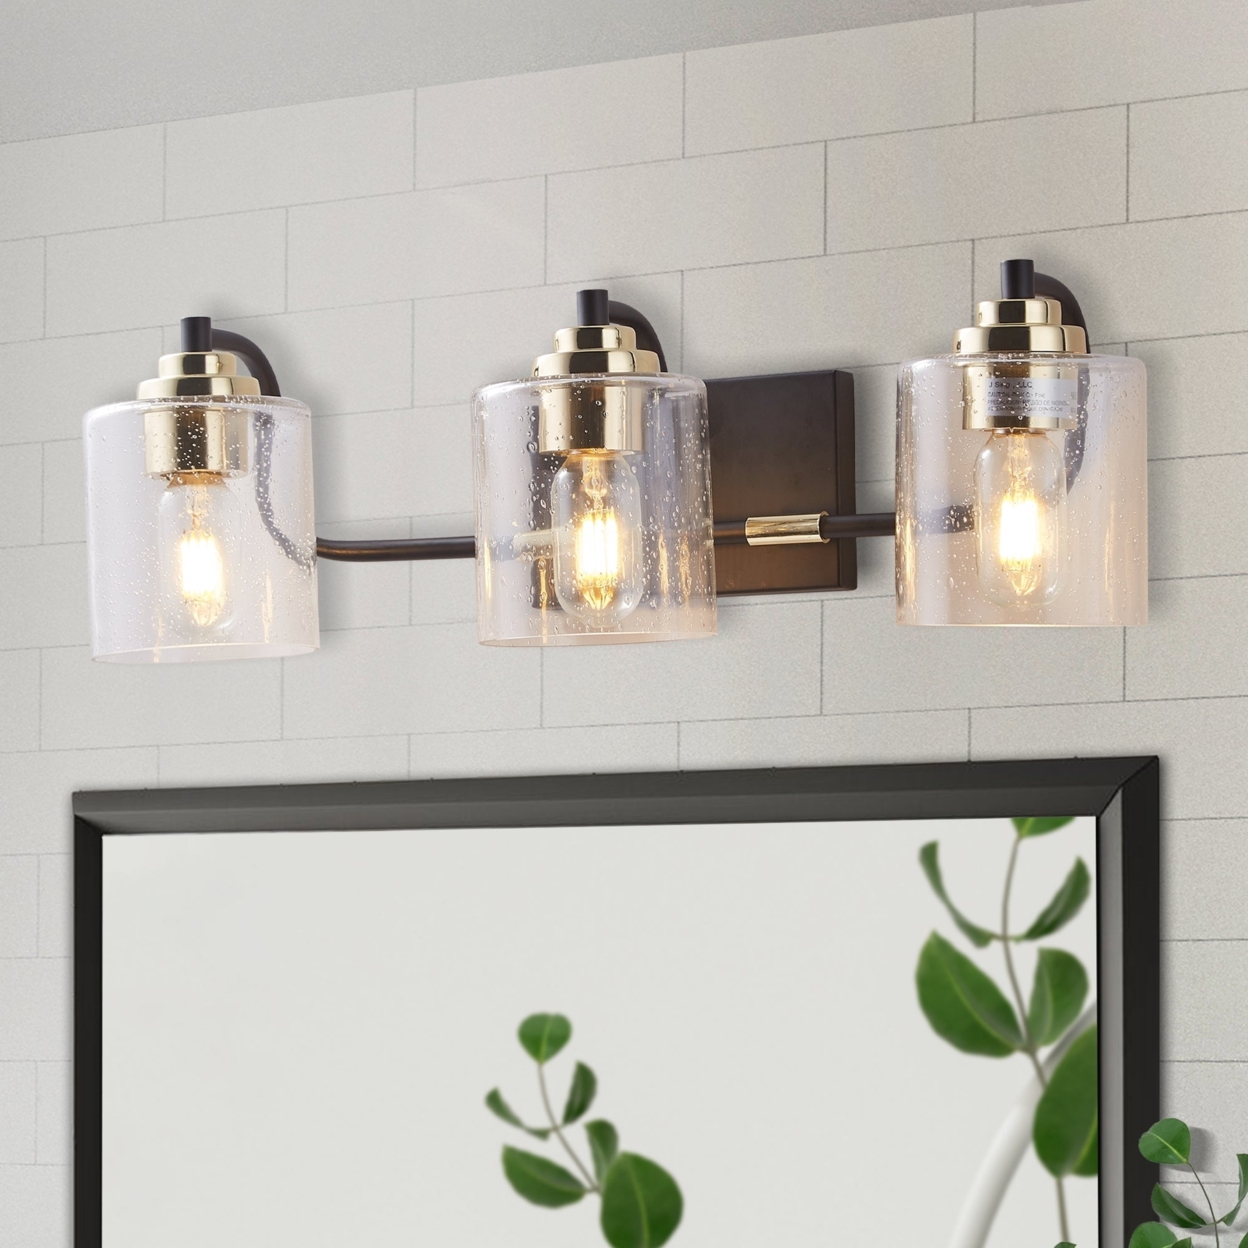 ExBrite 3-Light Bathroom Vanity Lights - 1301